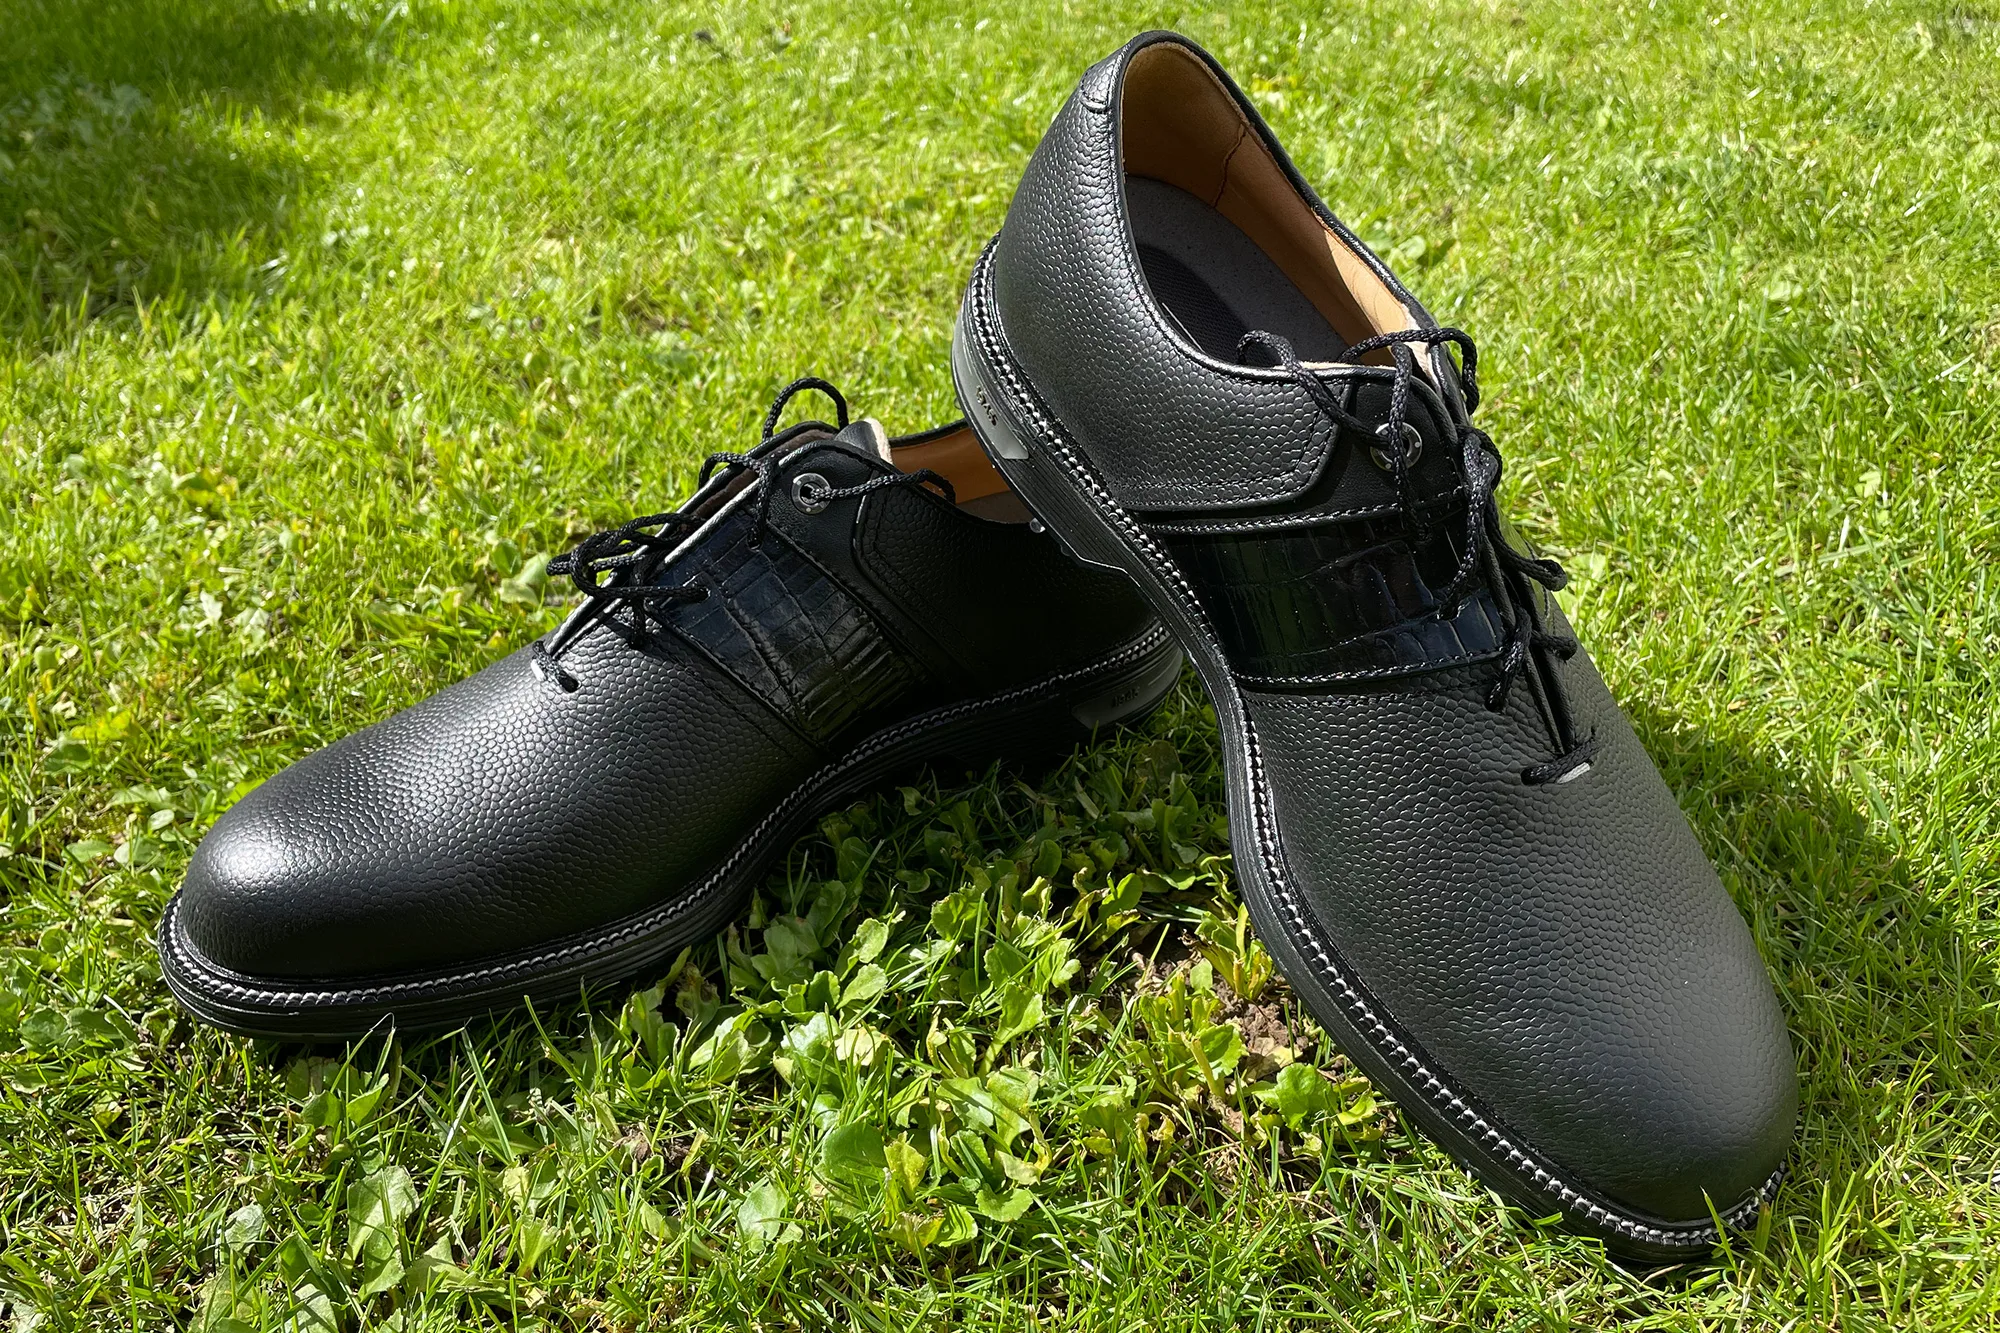 FootJoy Premiere Series Packard Golf Shoe Review